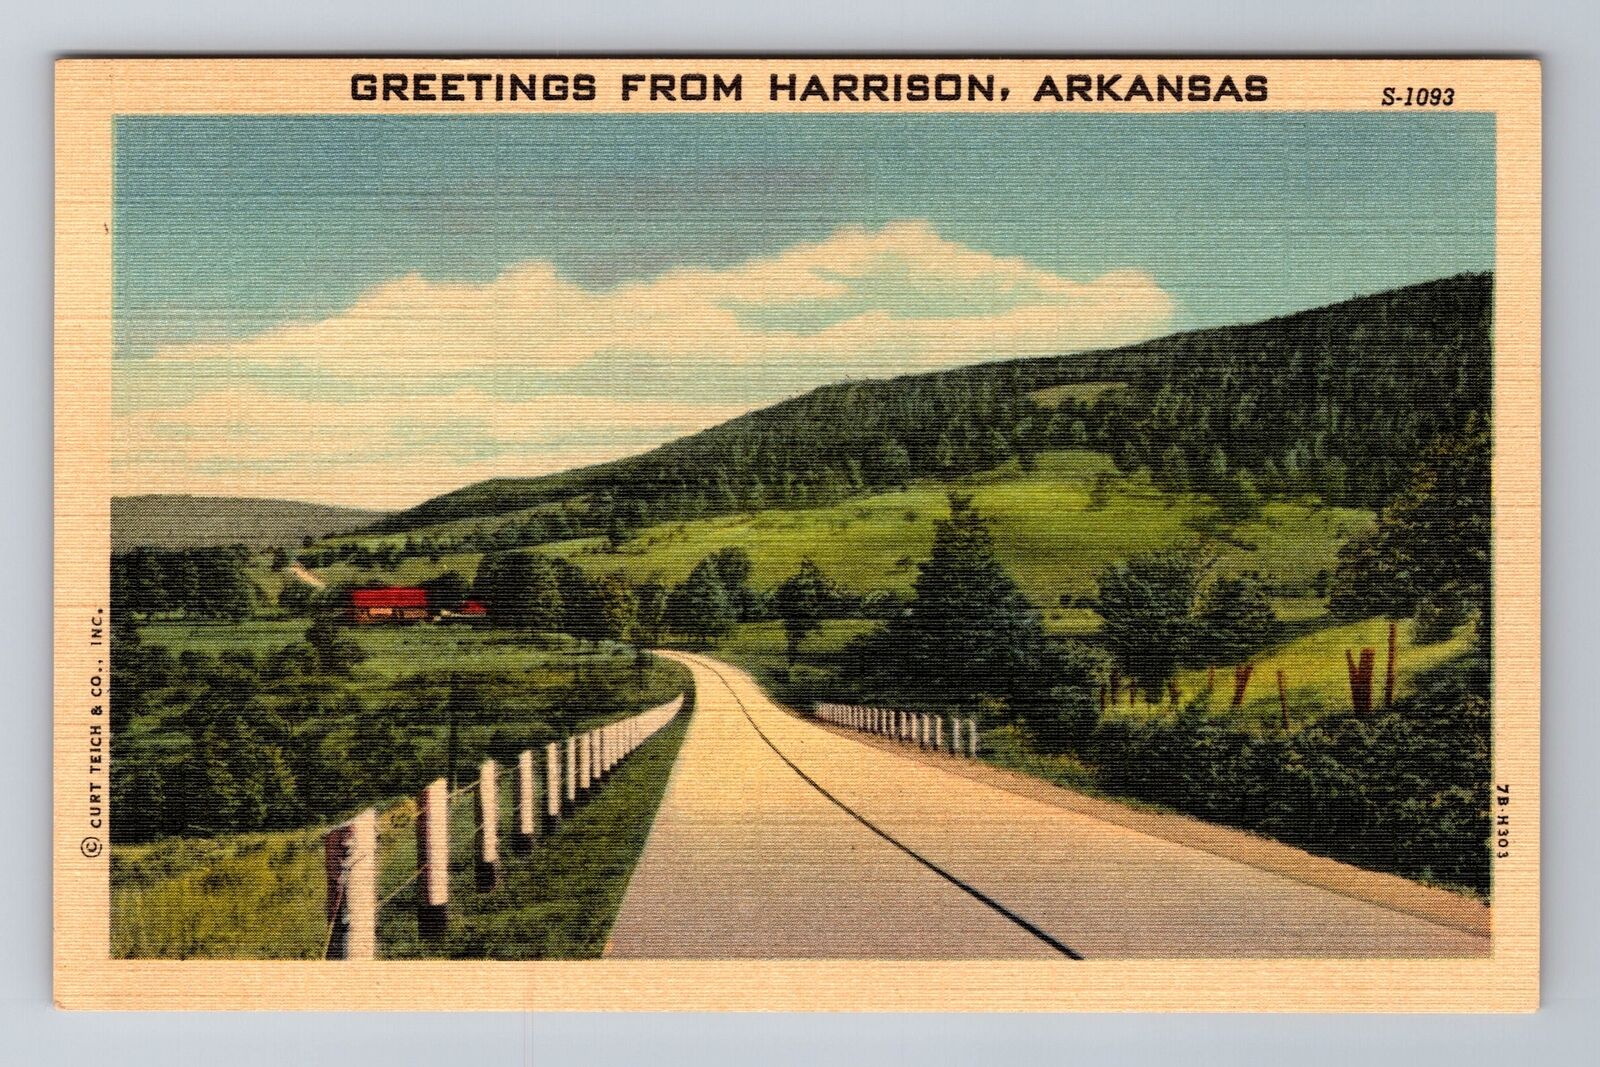 Harrison AR-Arkansas, General Greetings On Road, Antique, Vintage Postcard